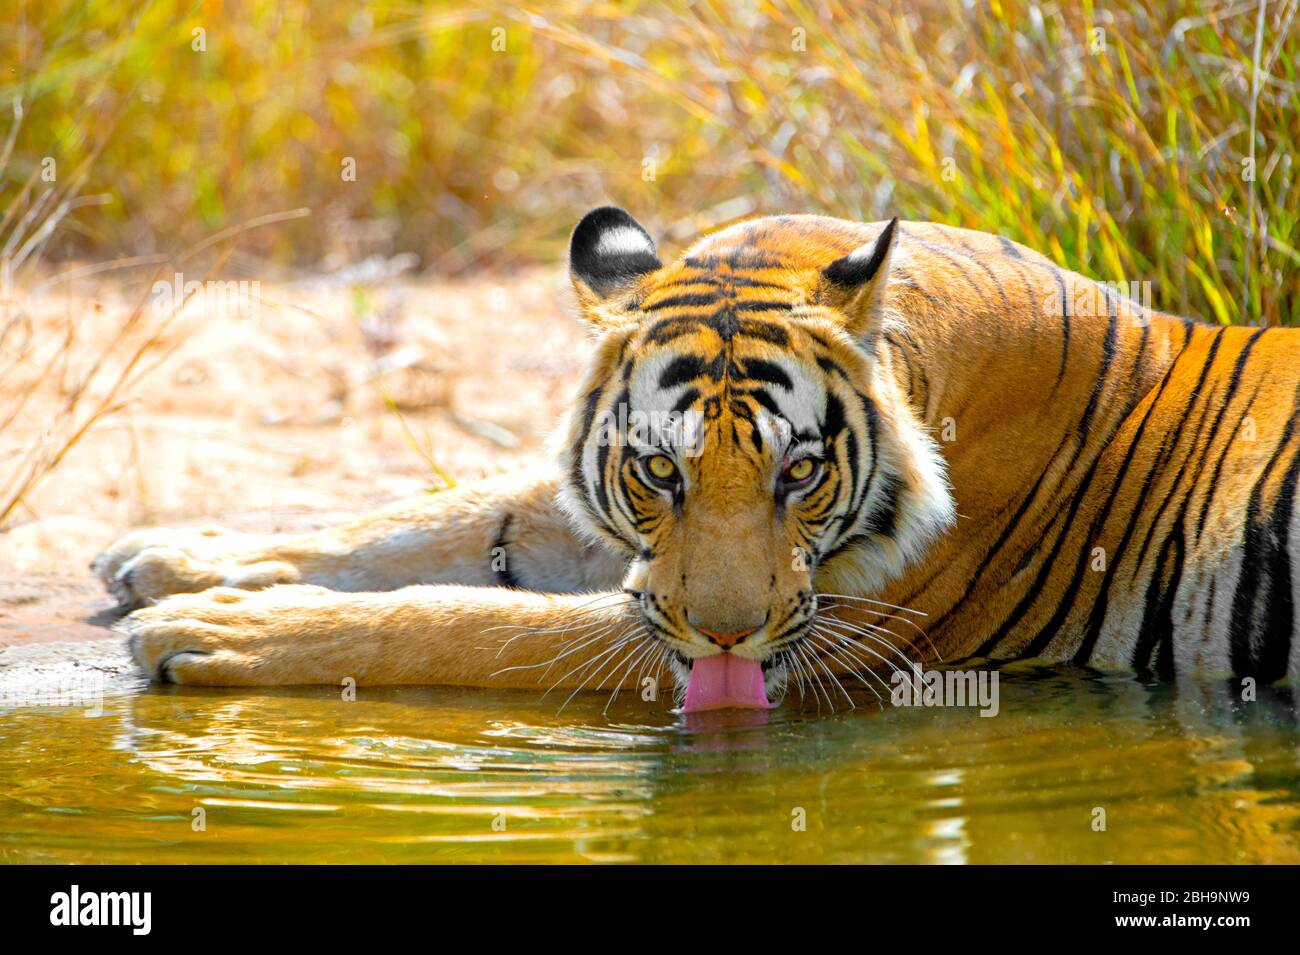 Bengal tiger drinking water, India Stock Photo